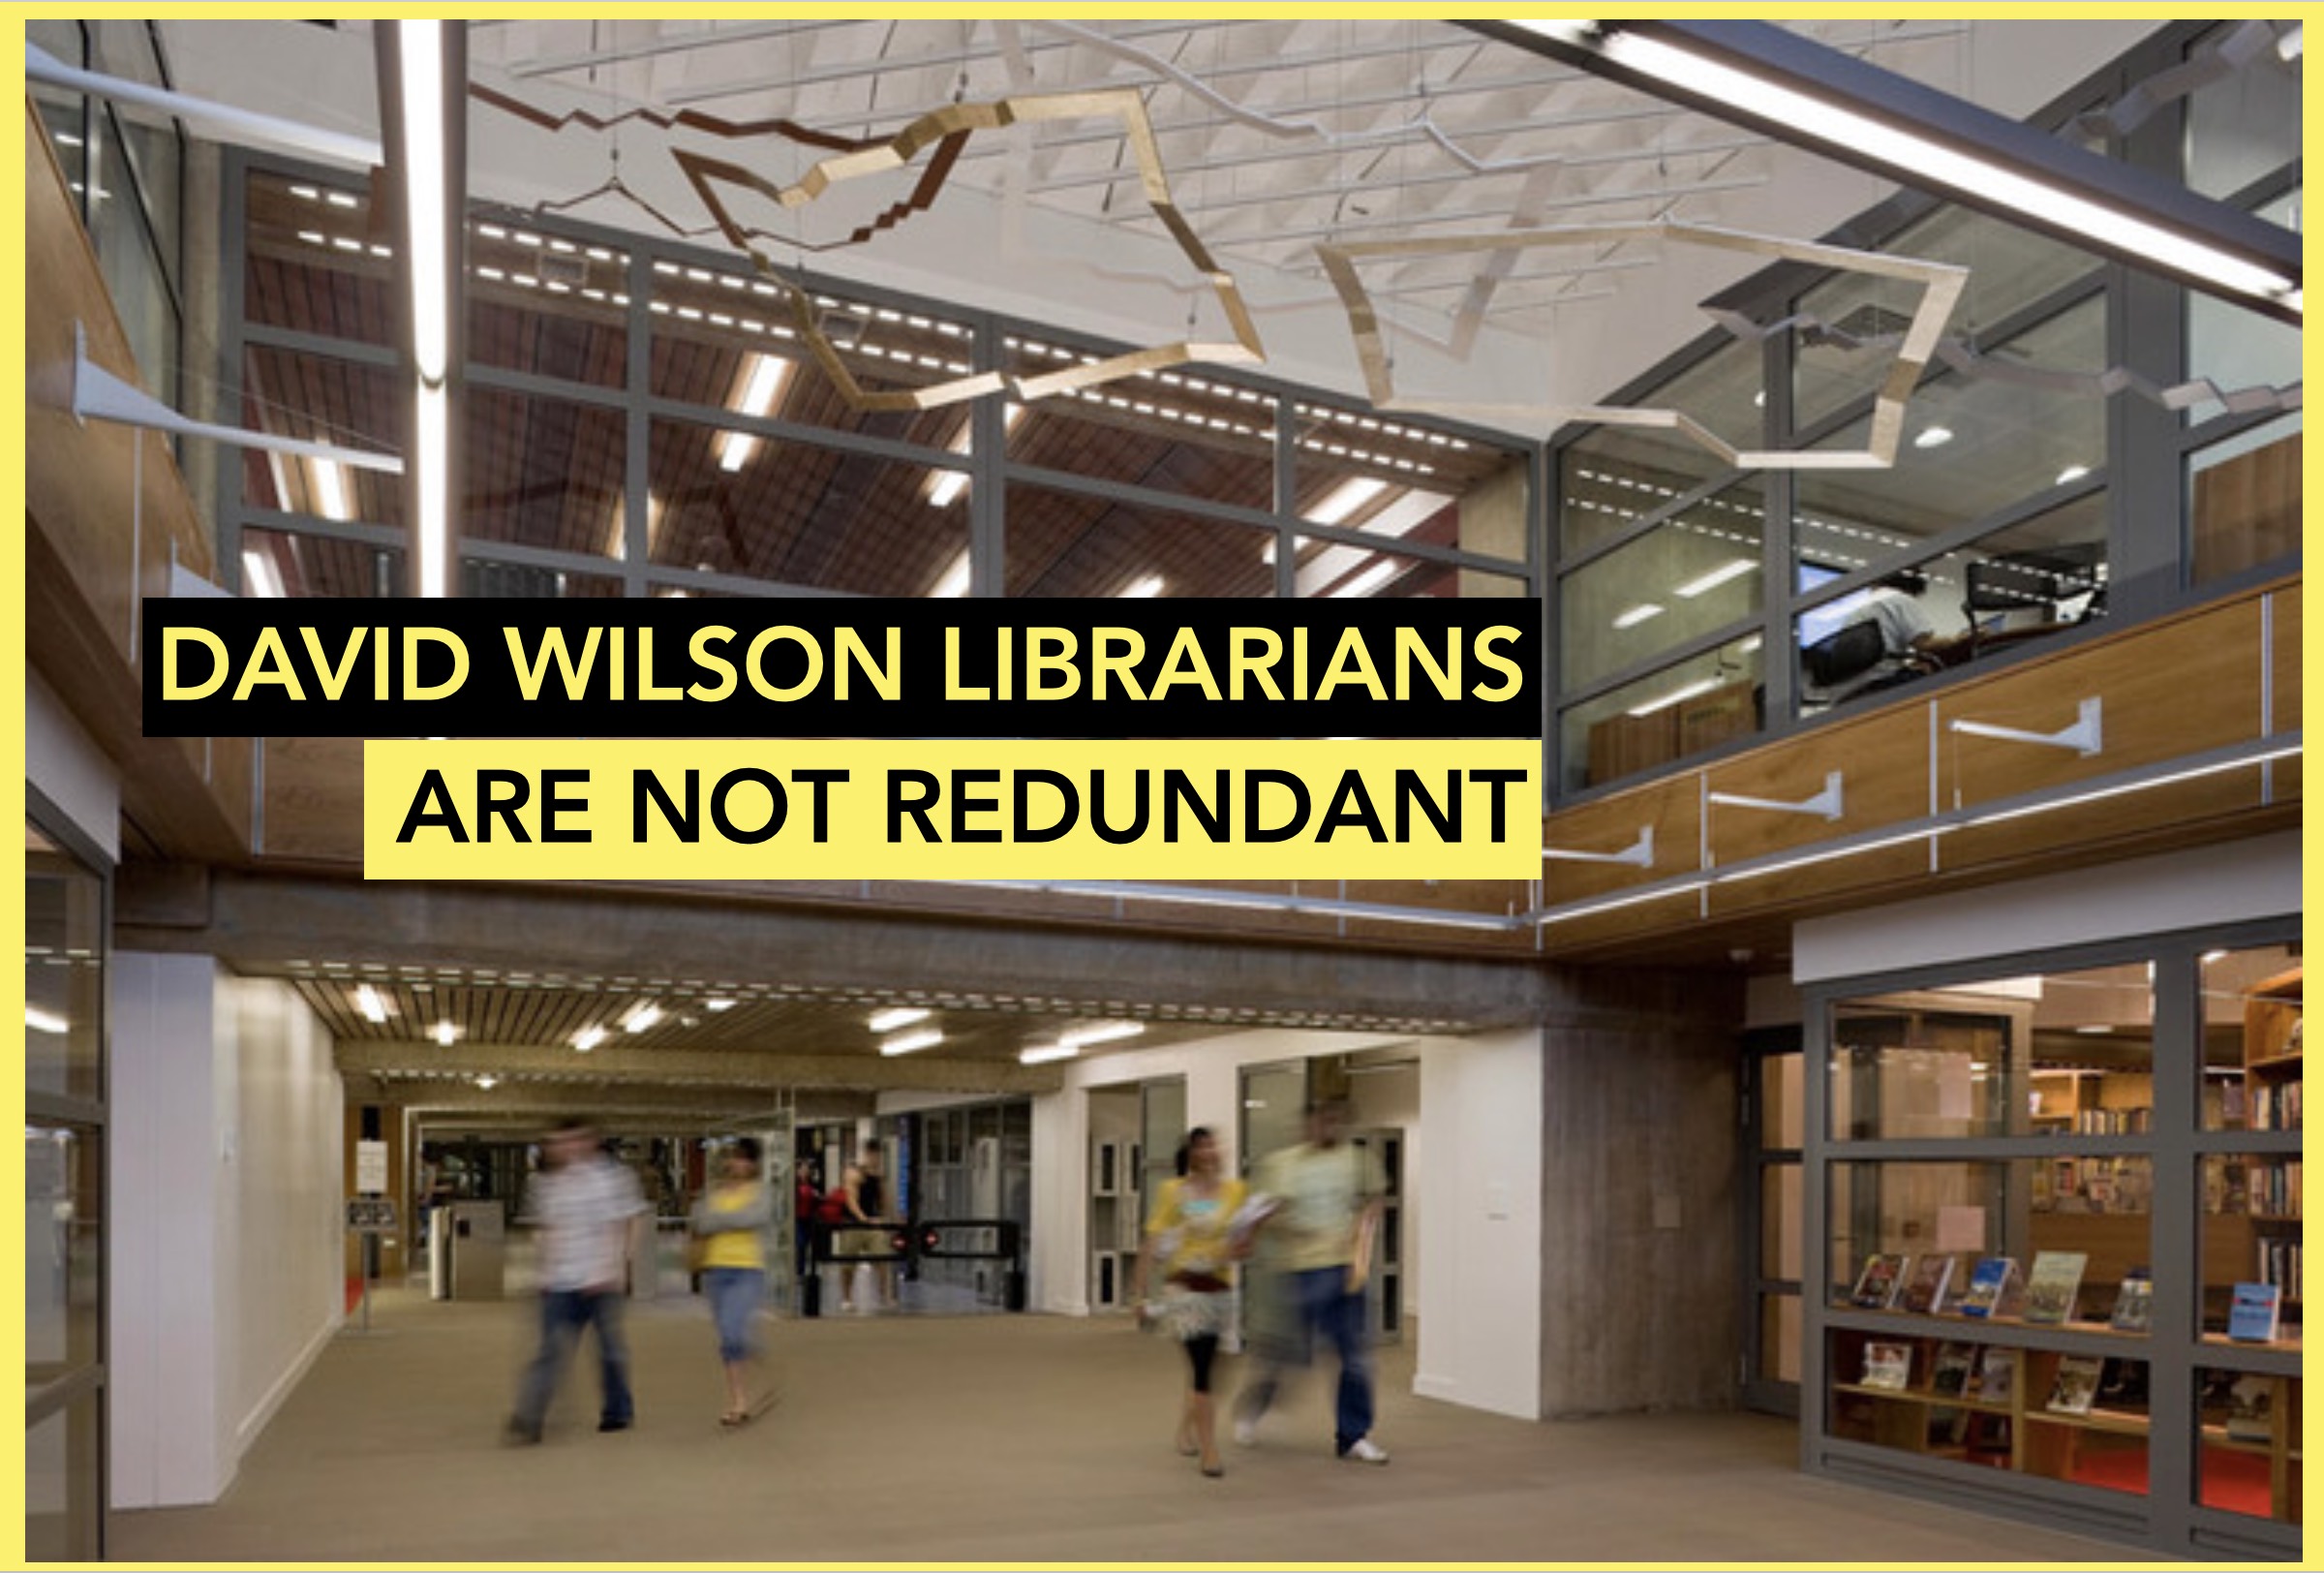 "David Wilson Librarians are not redundant"